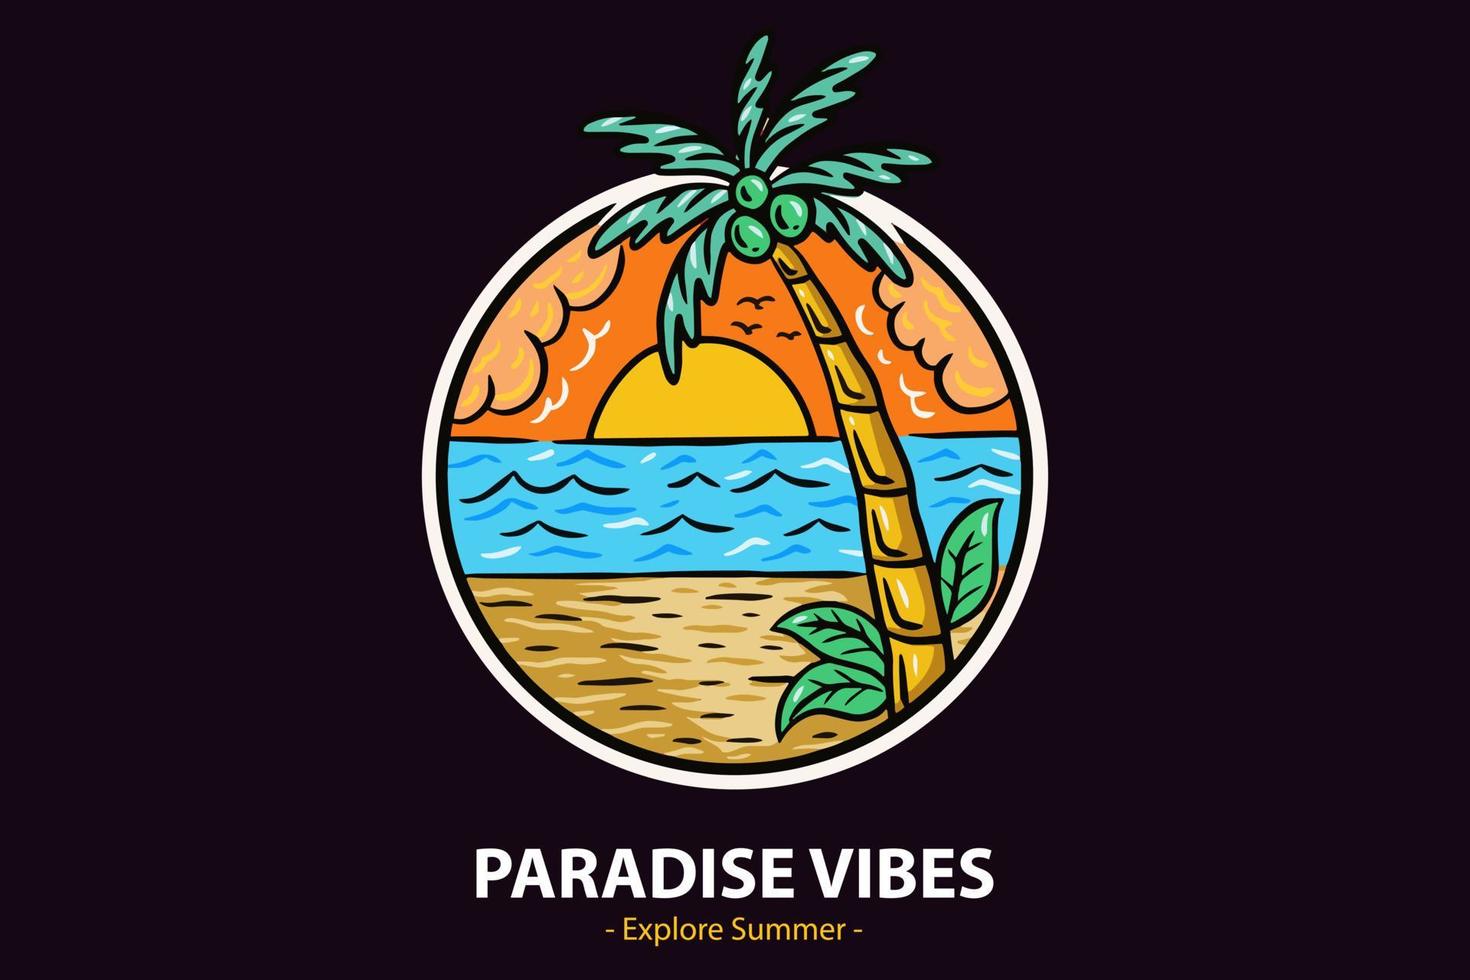 zomertijd badges met zonsondergang en golf kokospalm en surf strand paradijs eiland hemel vector